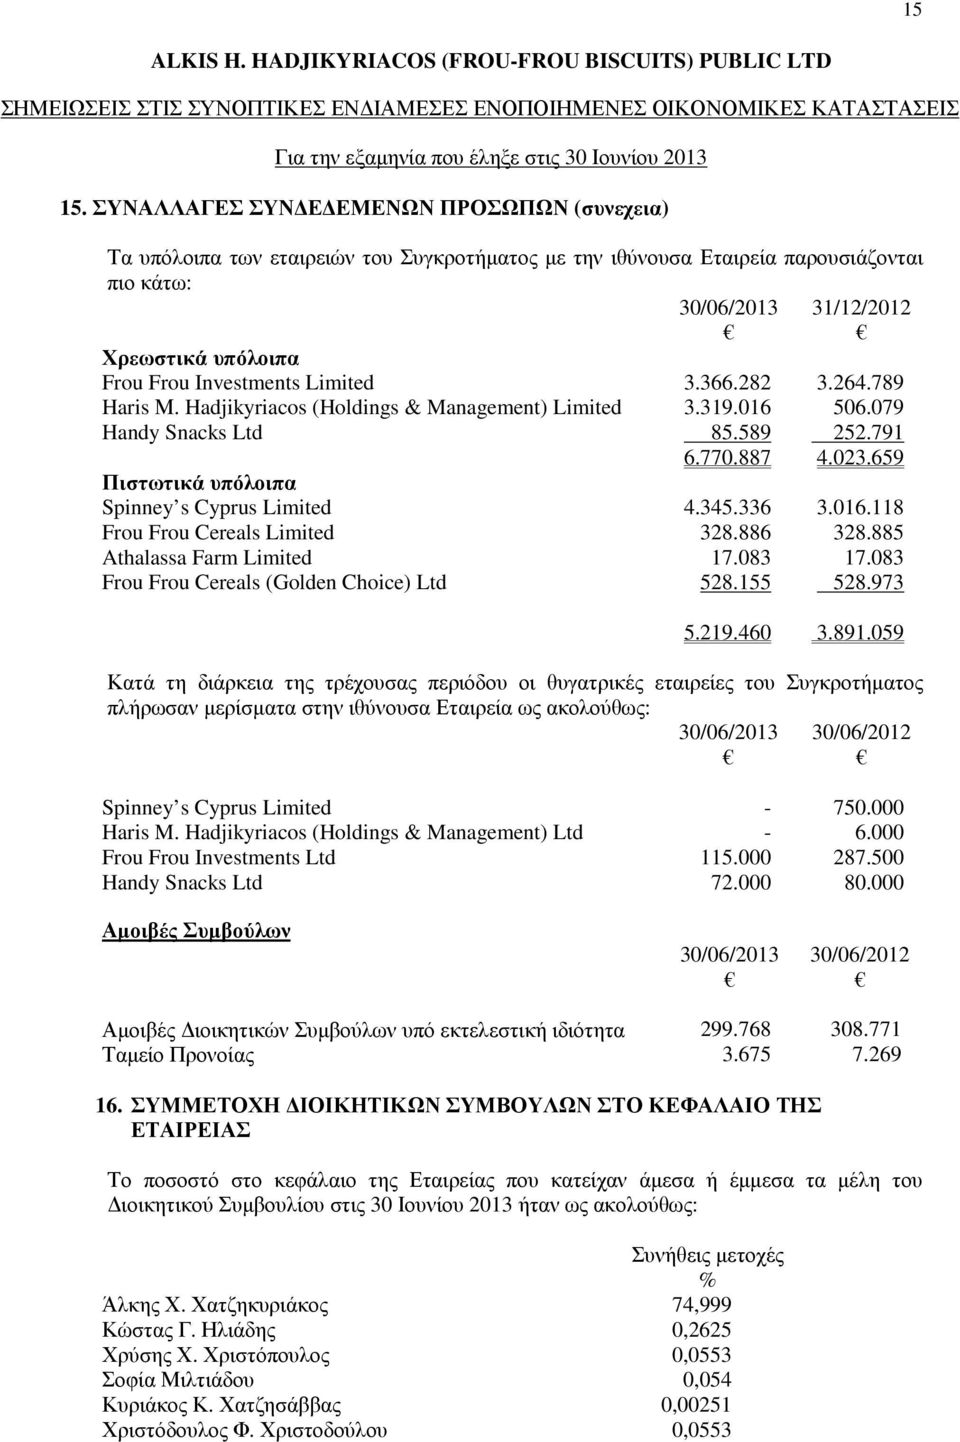 Investments Limited 3.366.282 3.264.789 Haris Μ. Hadjikyriacos (Holdings & Management) Limited 3.319.016 506.079 Handy Snacks Ltd 85.589 252.791 6.770.887 4.023.